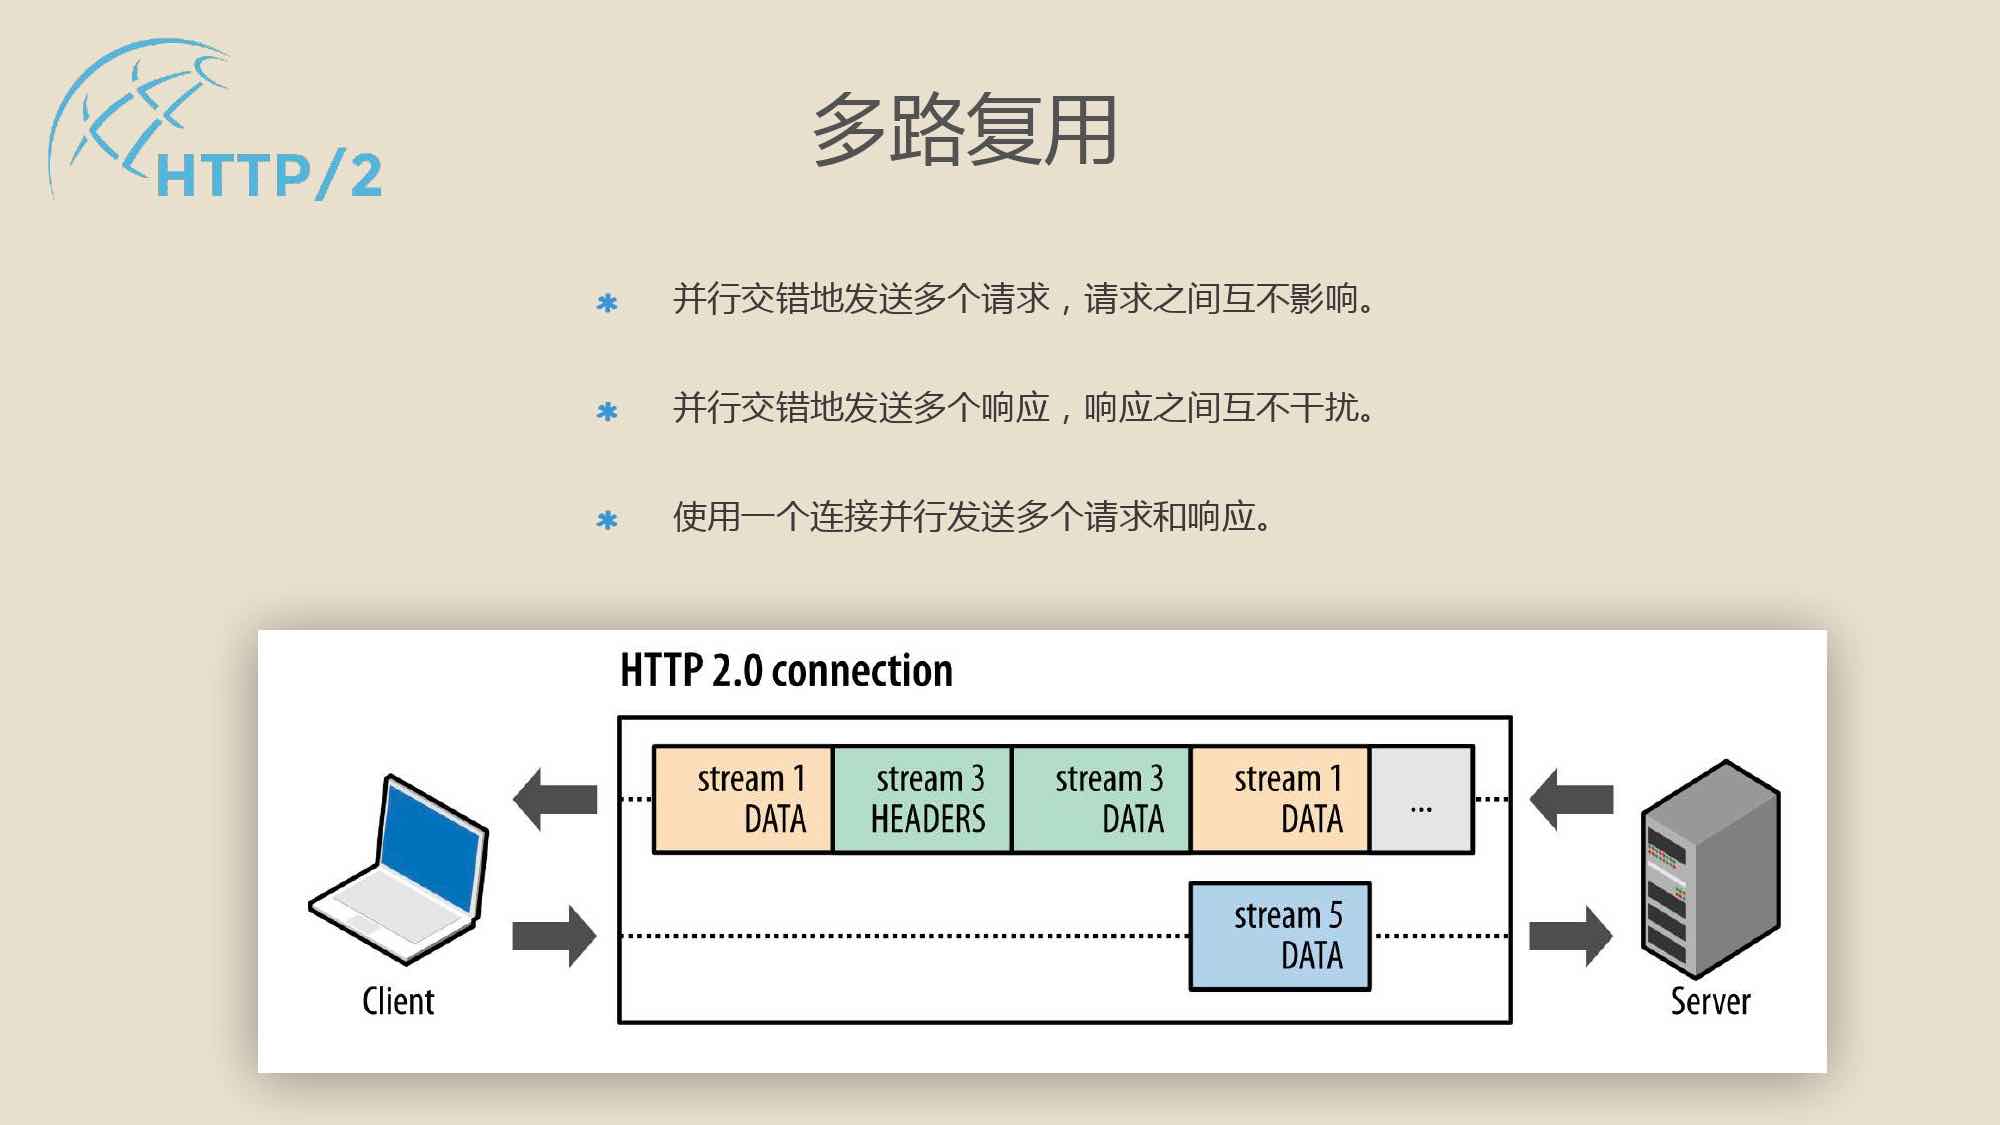 了解gRPC框架 - 使用http2协议